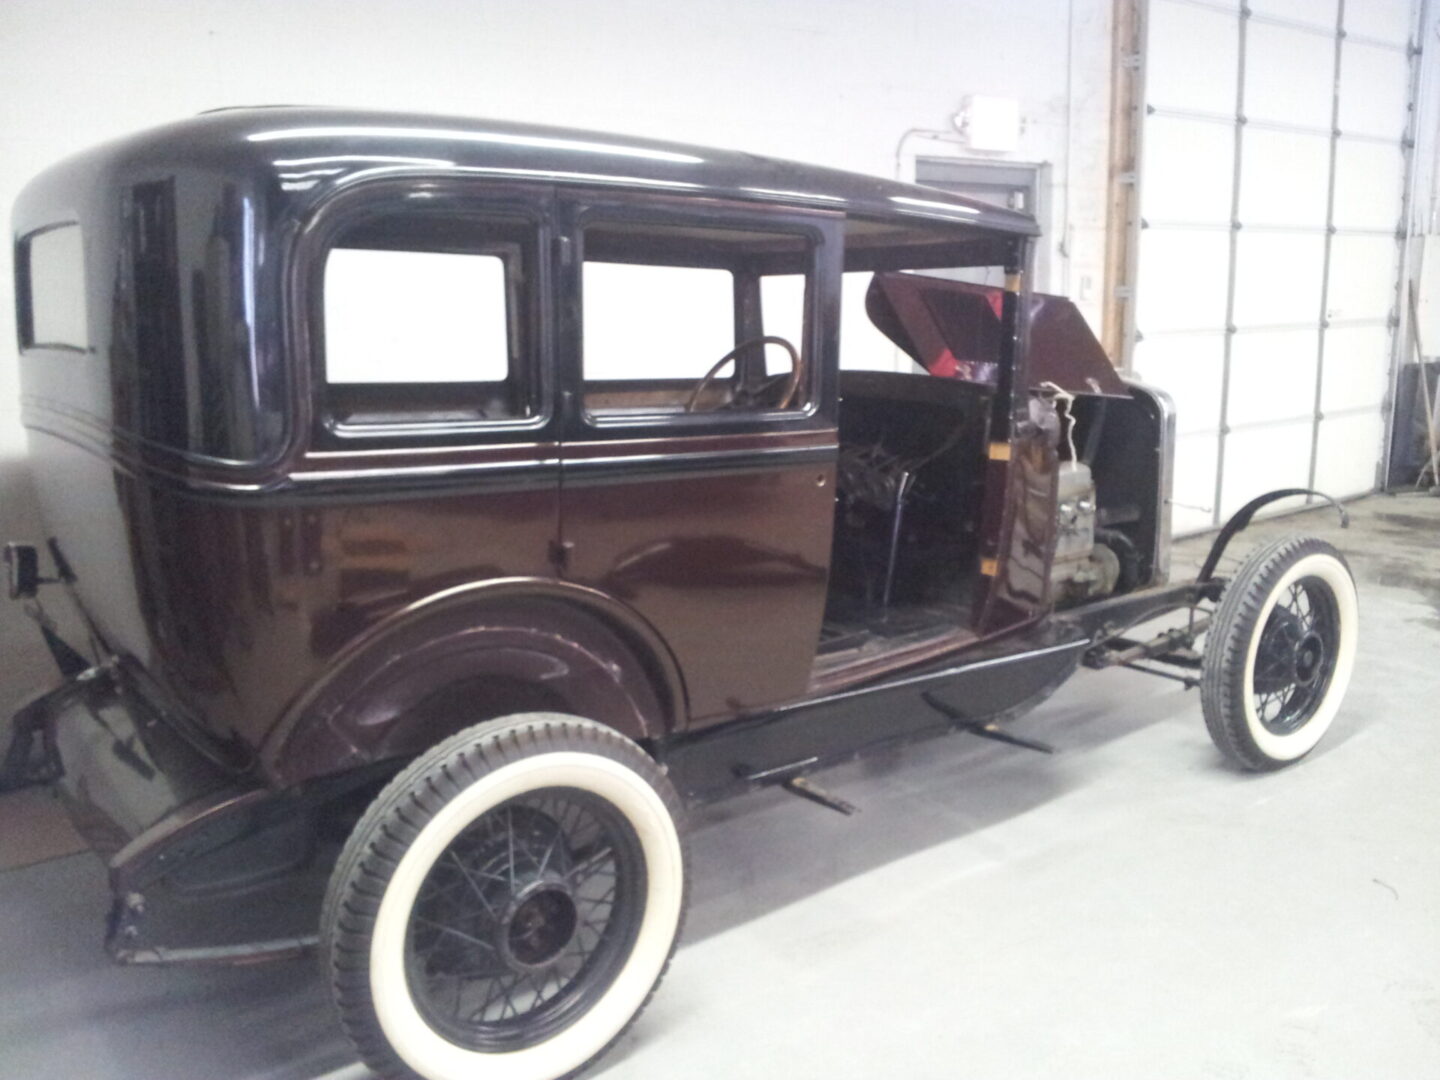 A 1930 Chevrolet model under restoration